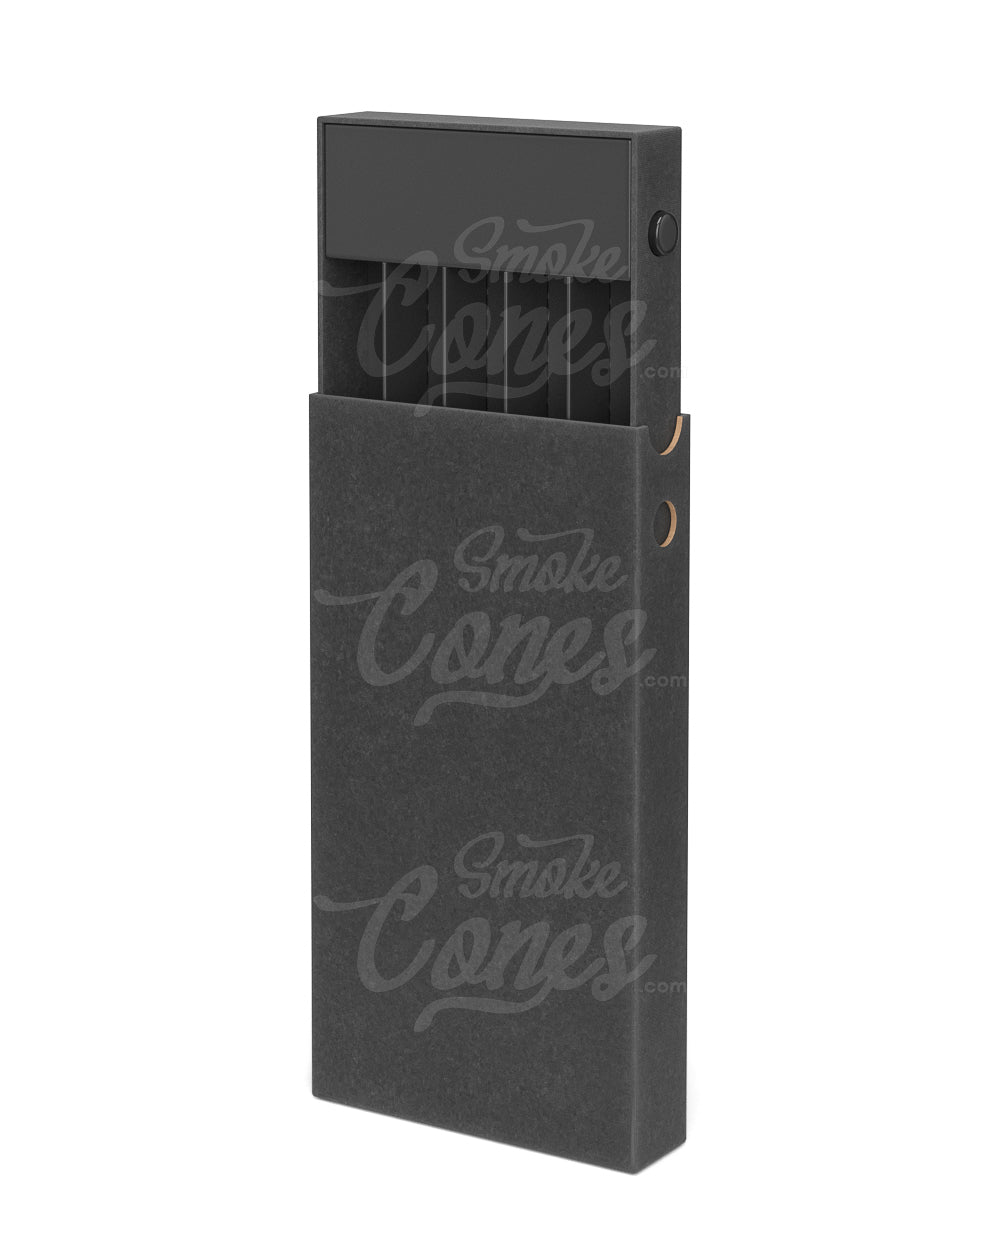 CR Pinch 'N Flip White Pre-Roll Joint Case - 130 Box